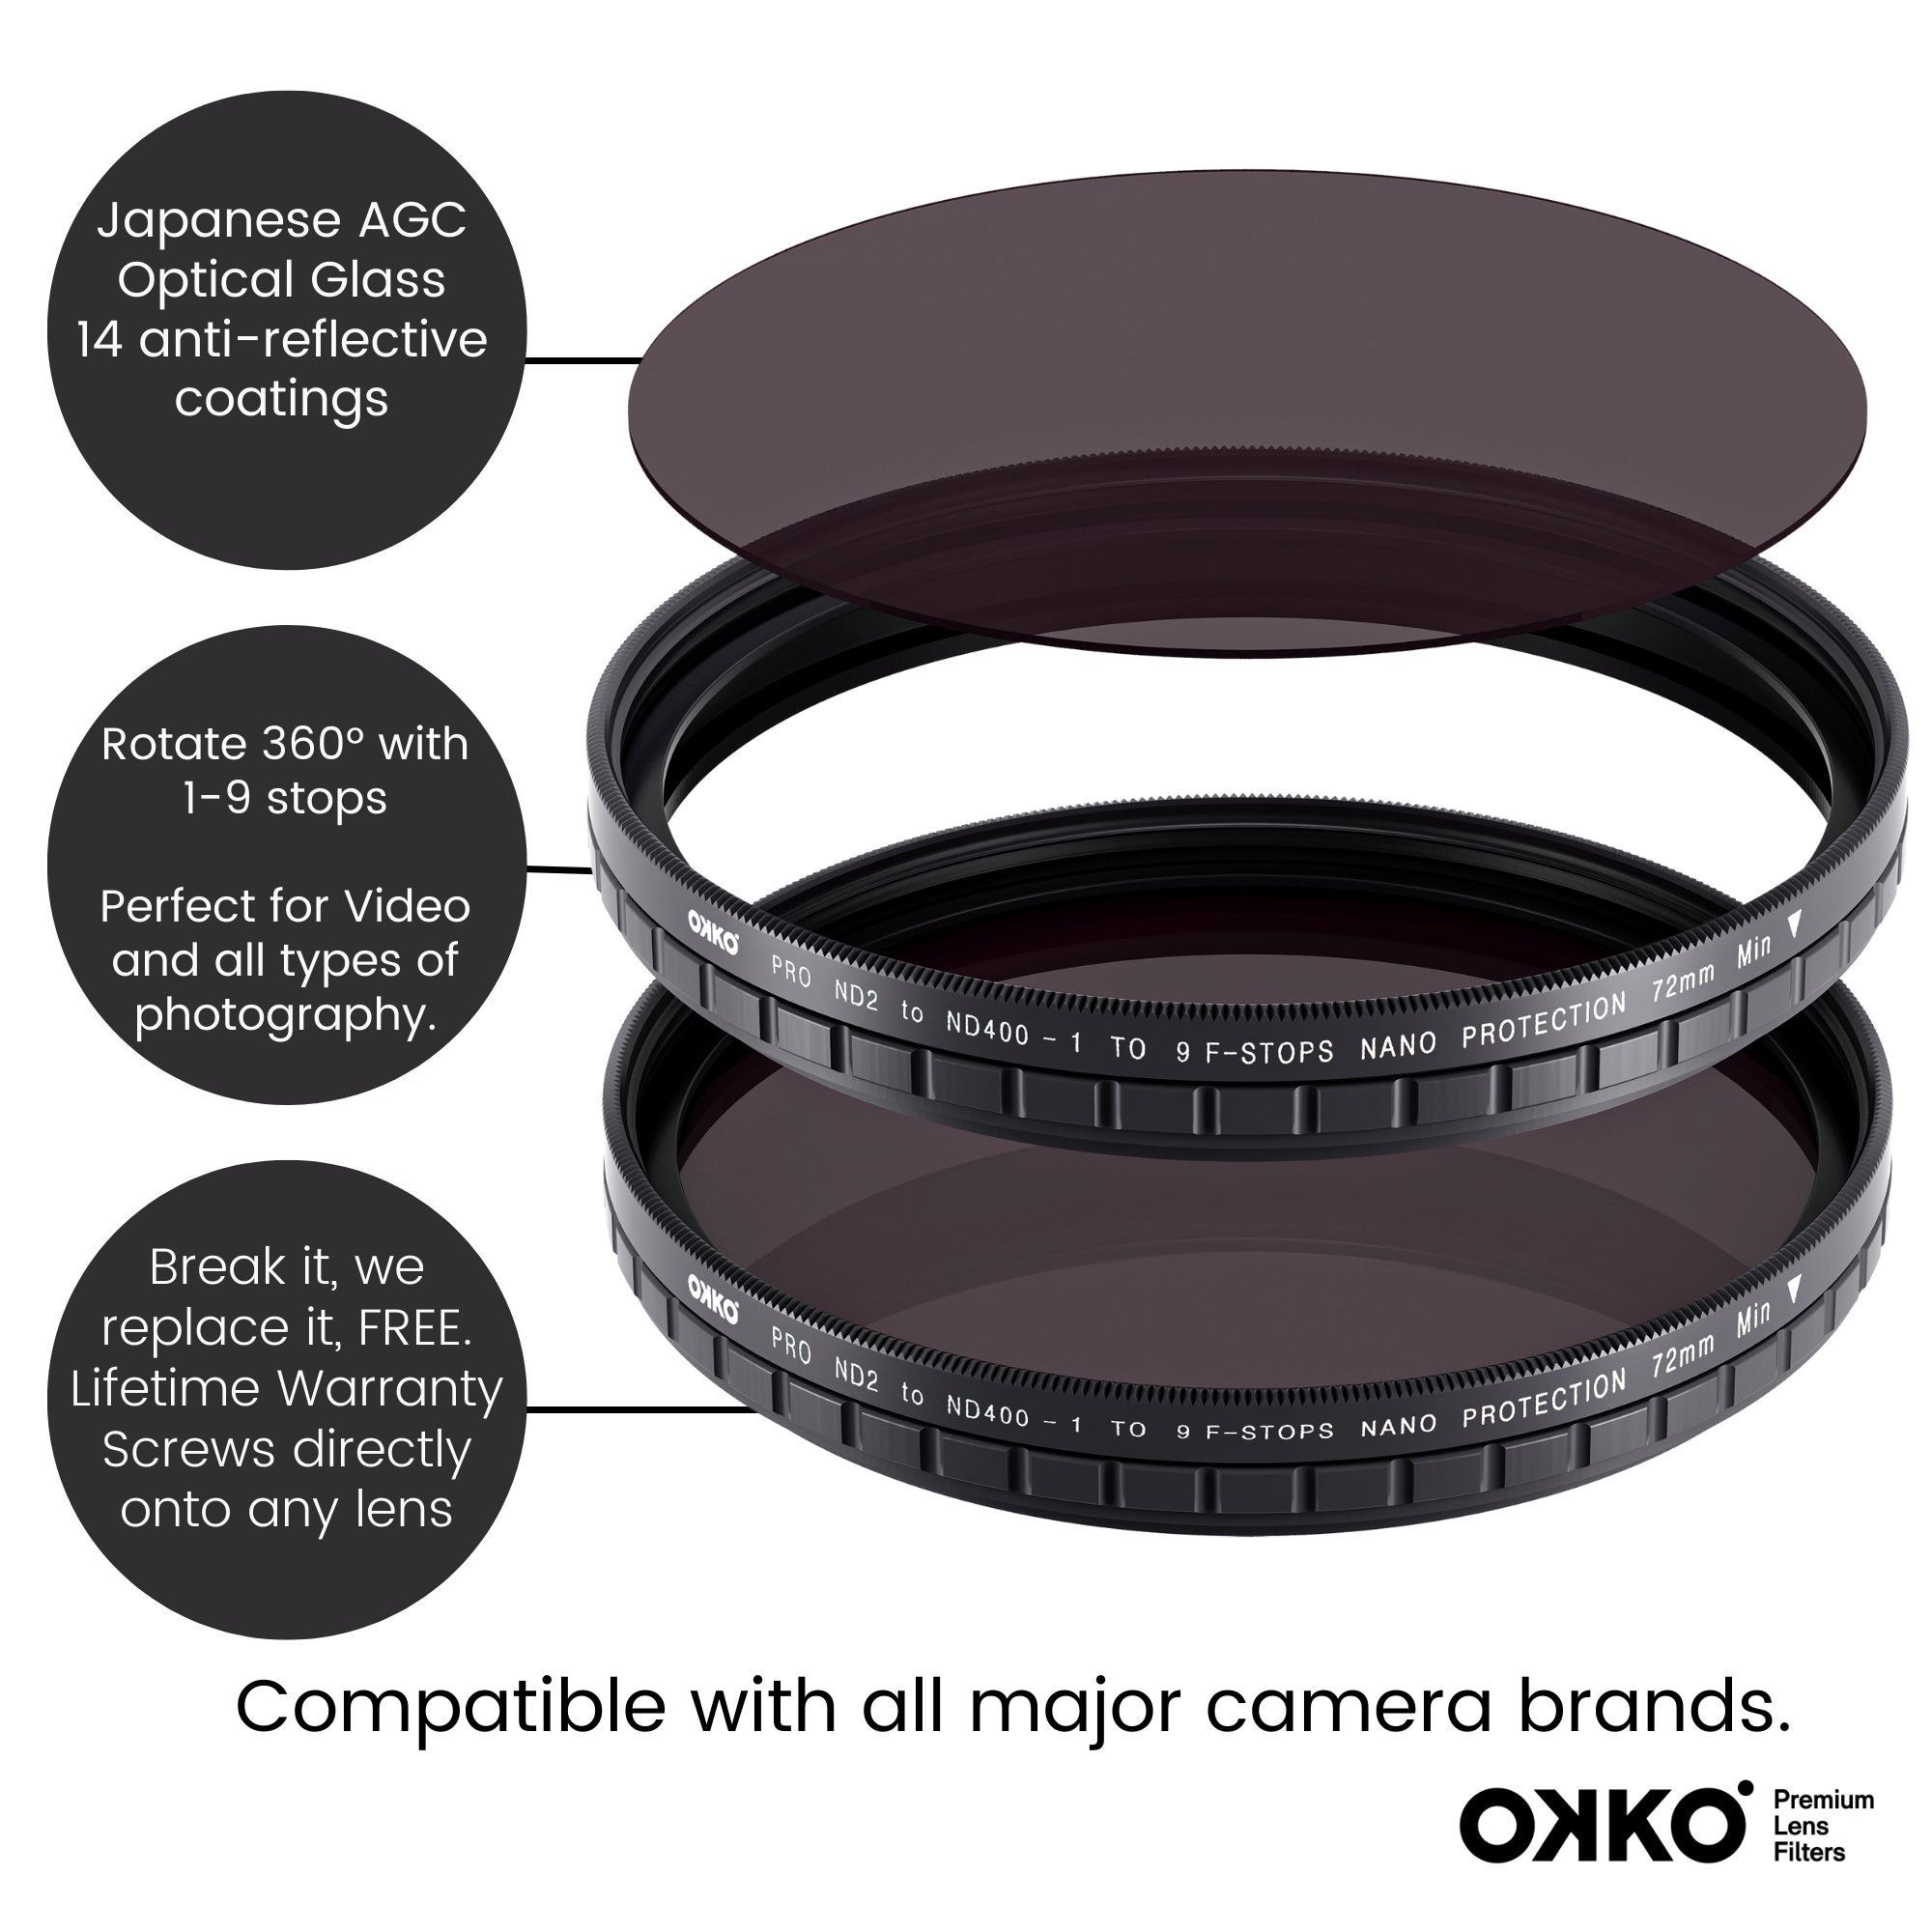 OKKO Pro Variable Neutral Density Filter NDV